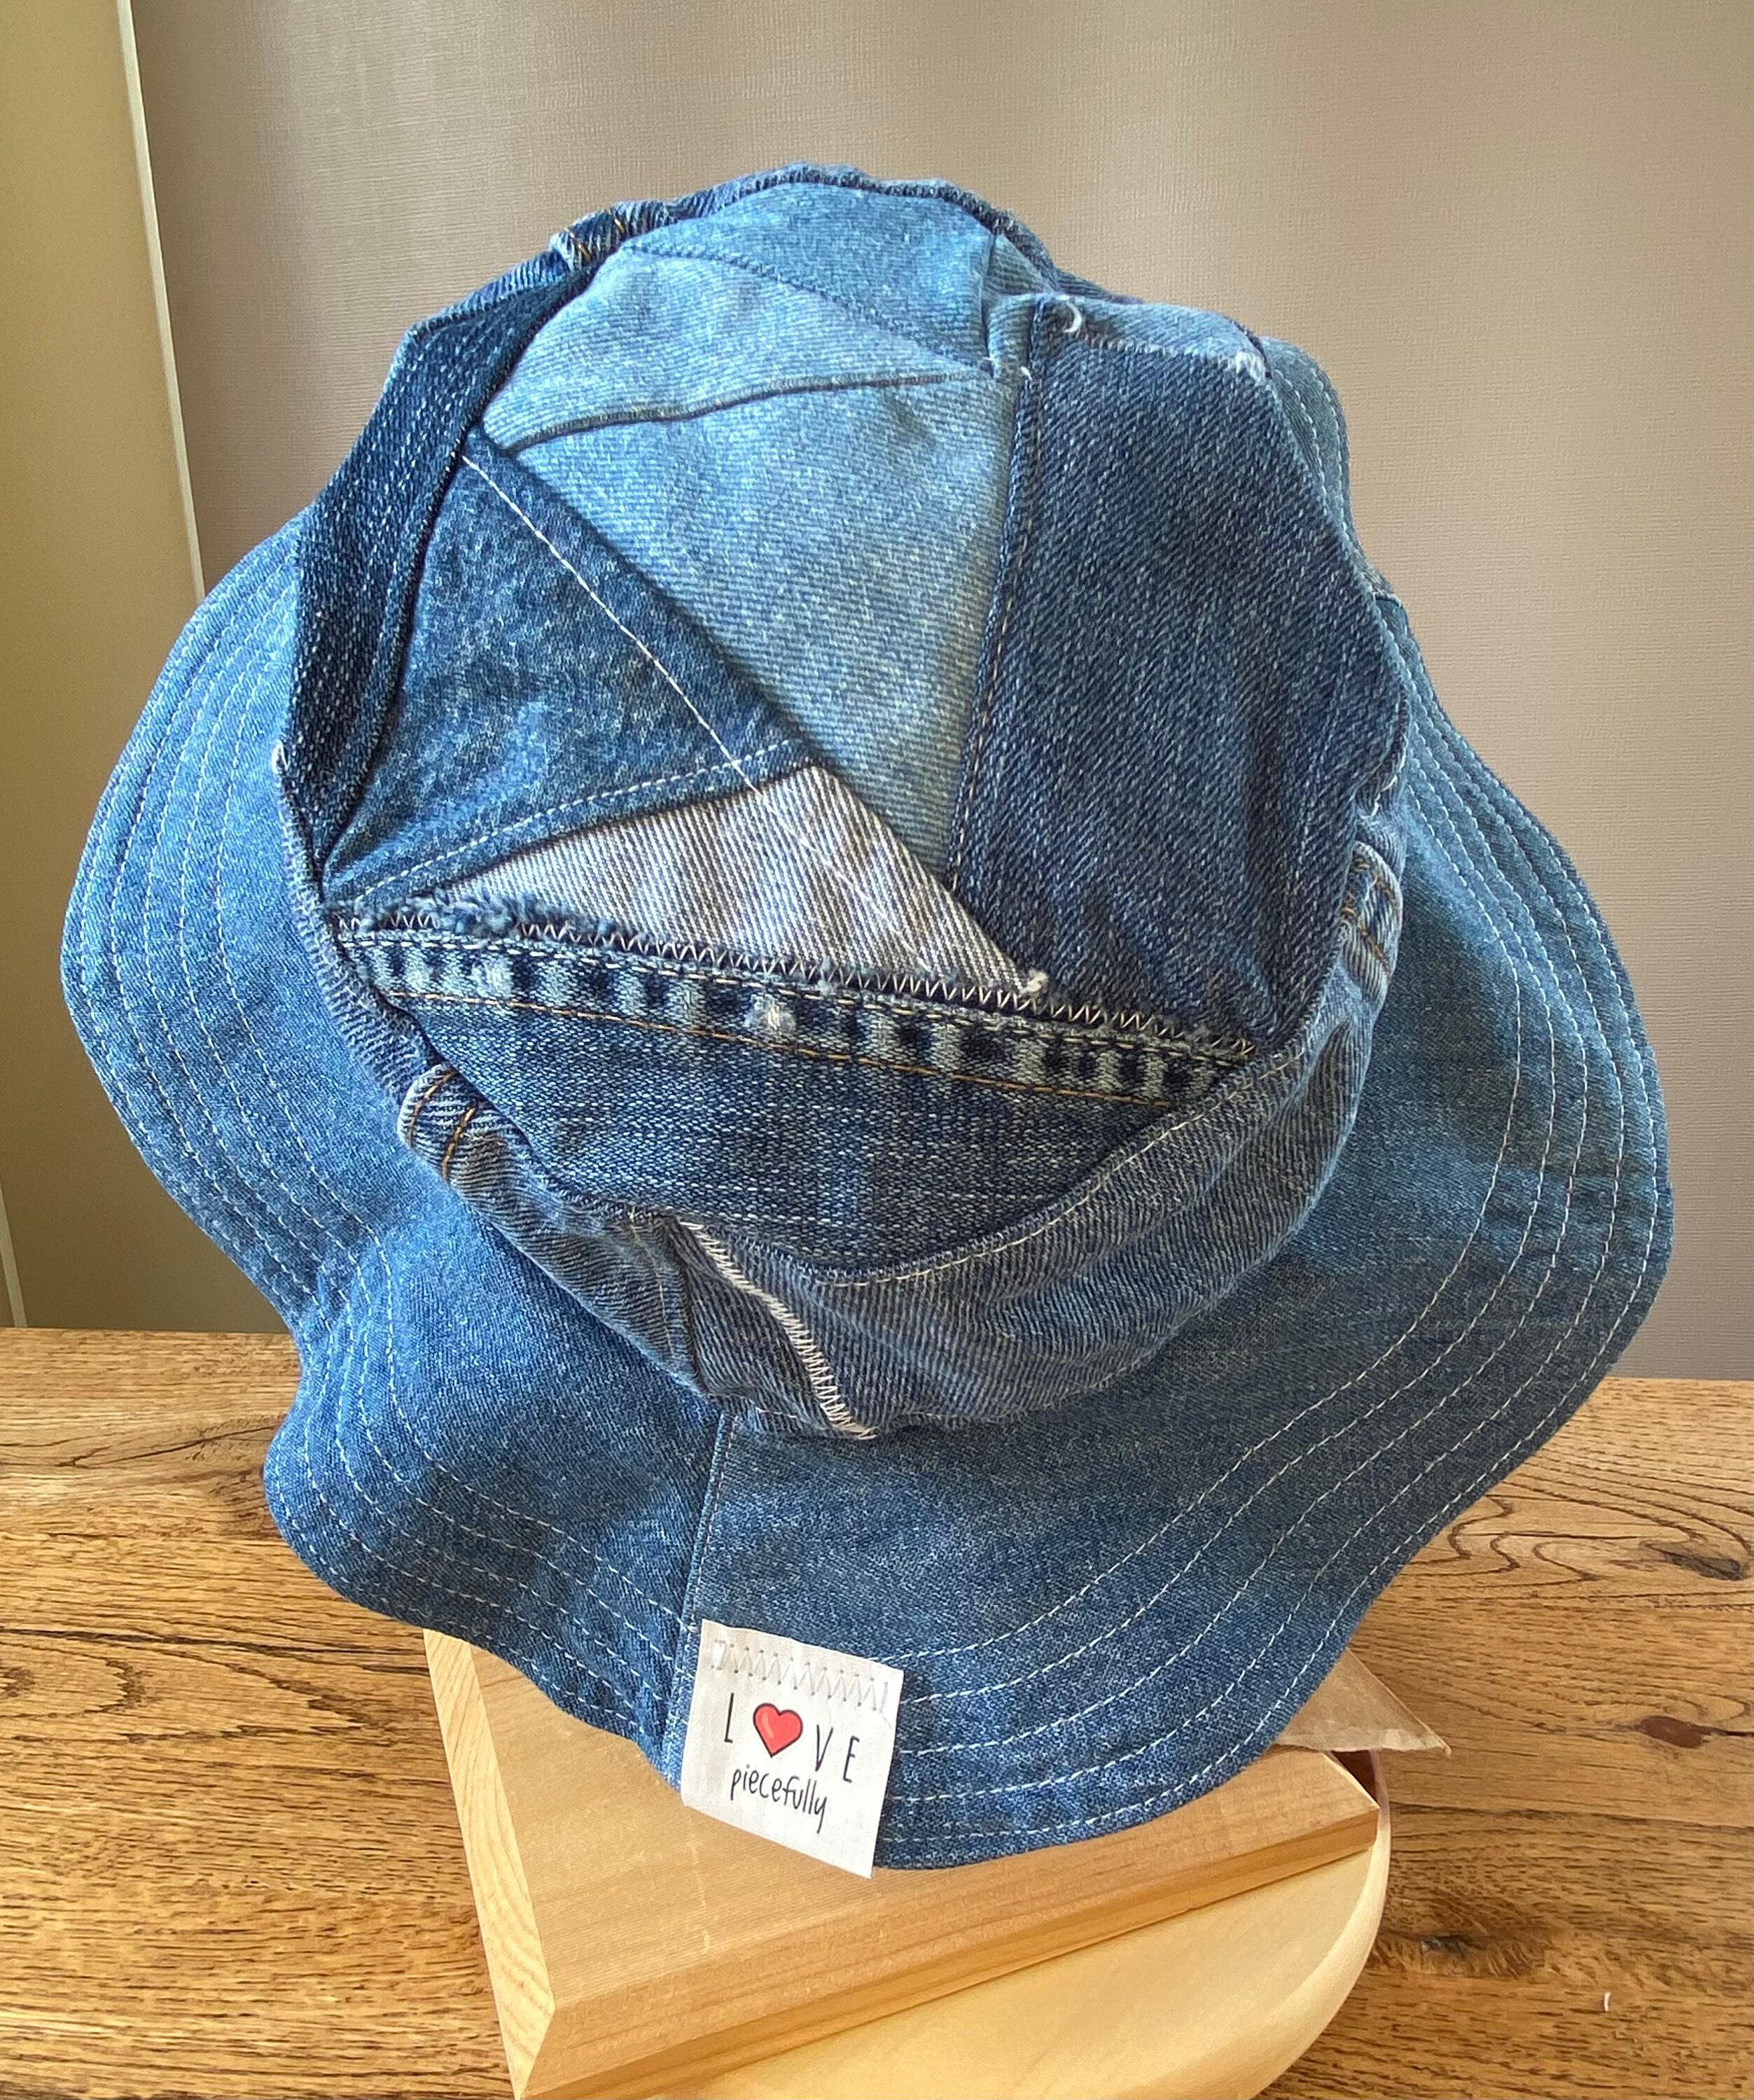 Handmade XL Denim Bucket Hat Floppy Brim Sunhat, Packable , Hippie Boho 70s Style.